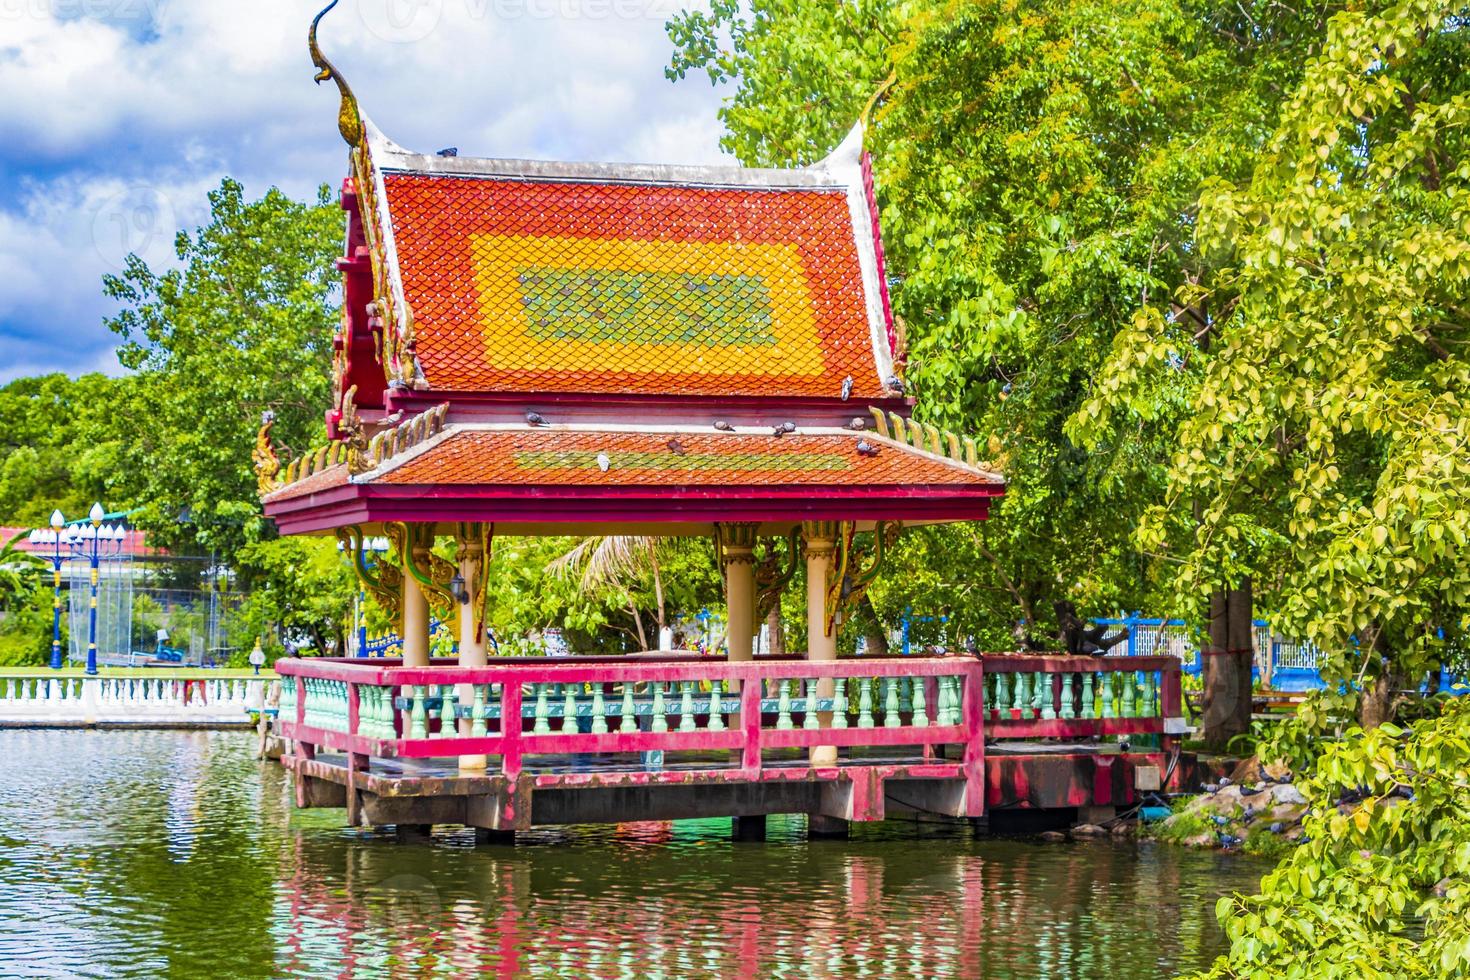 arquitetura colorida no templo wat plai laem na ilha de koh samui, tailândia, 2018 foto